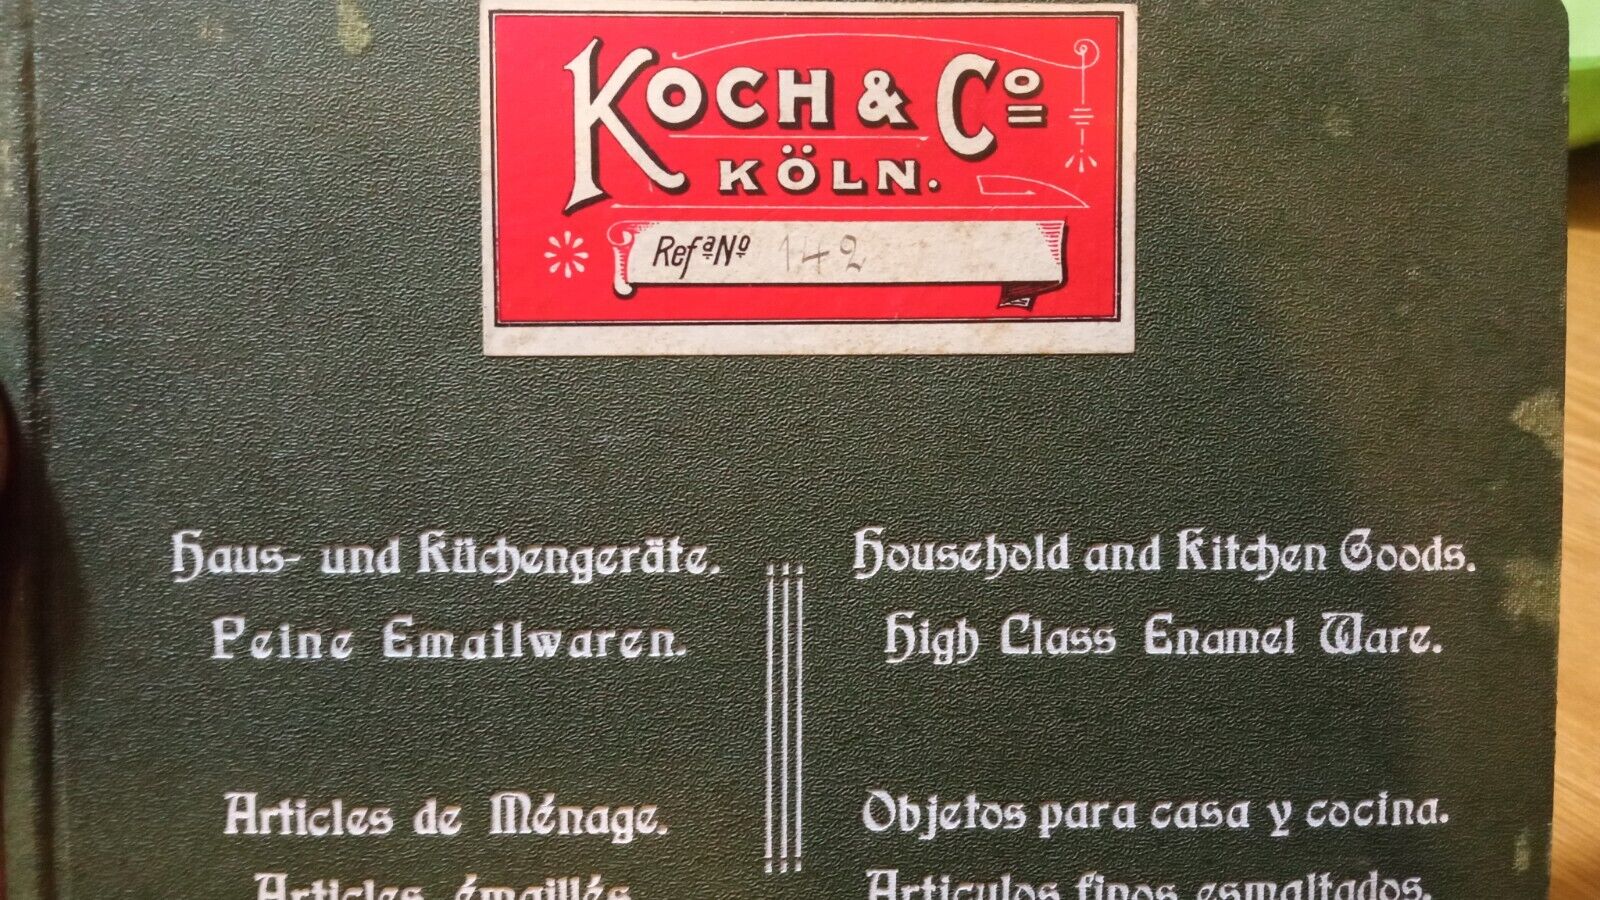 Original 1909 Koch & Co. Catalog - Kitchen and Home Goods